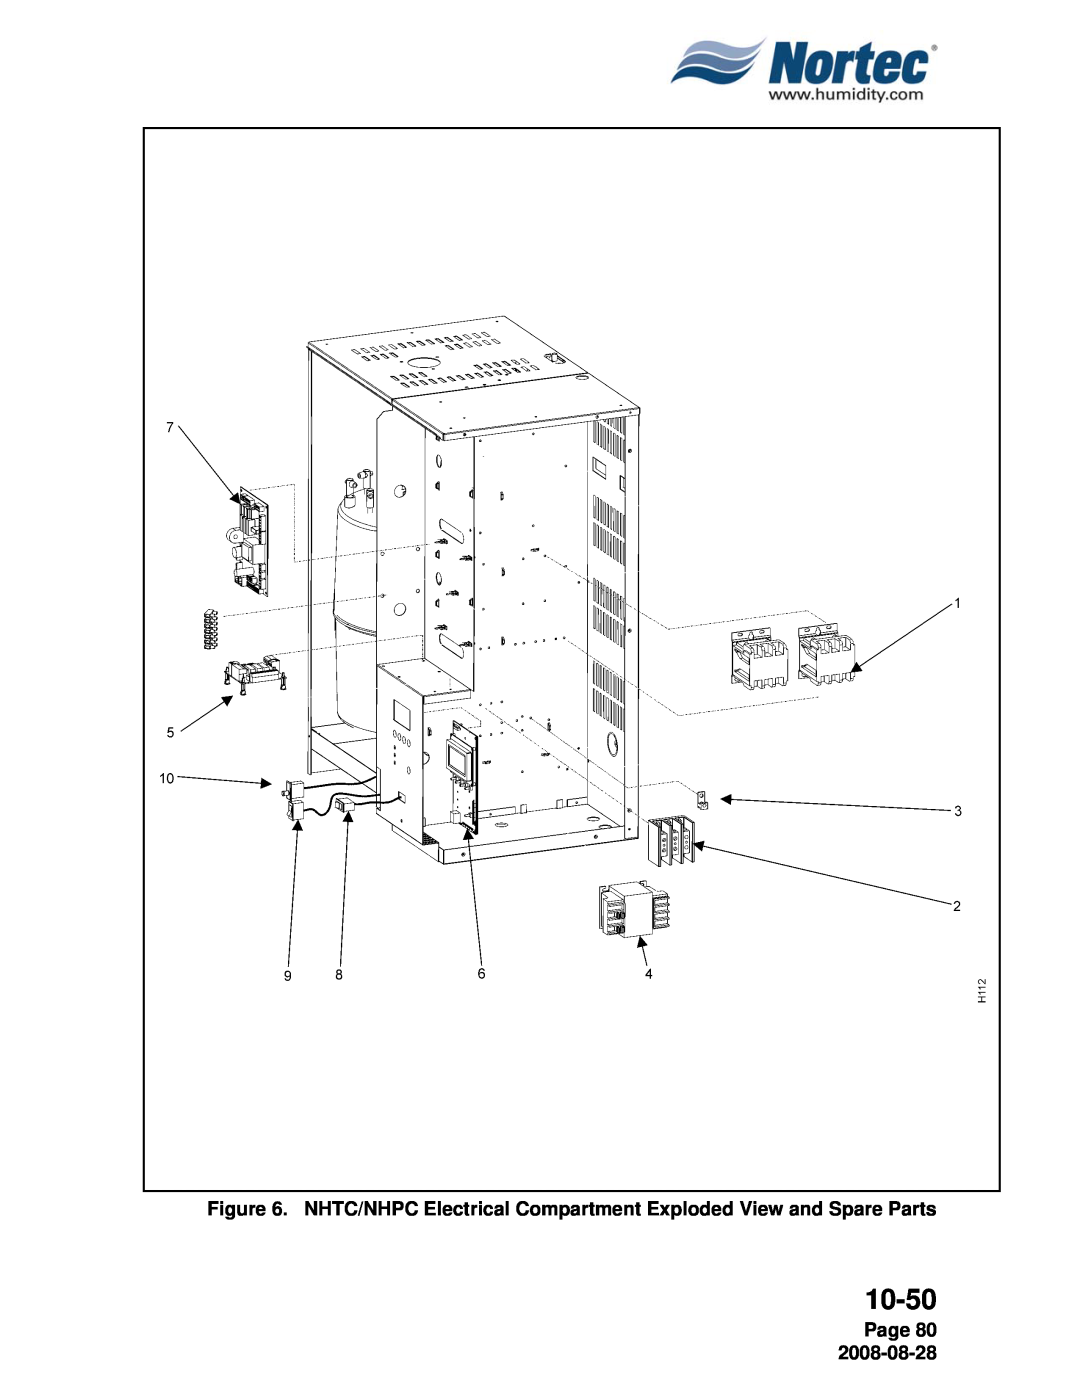 Nortec NH Series installation manual Page 80, 10-50 